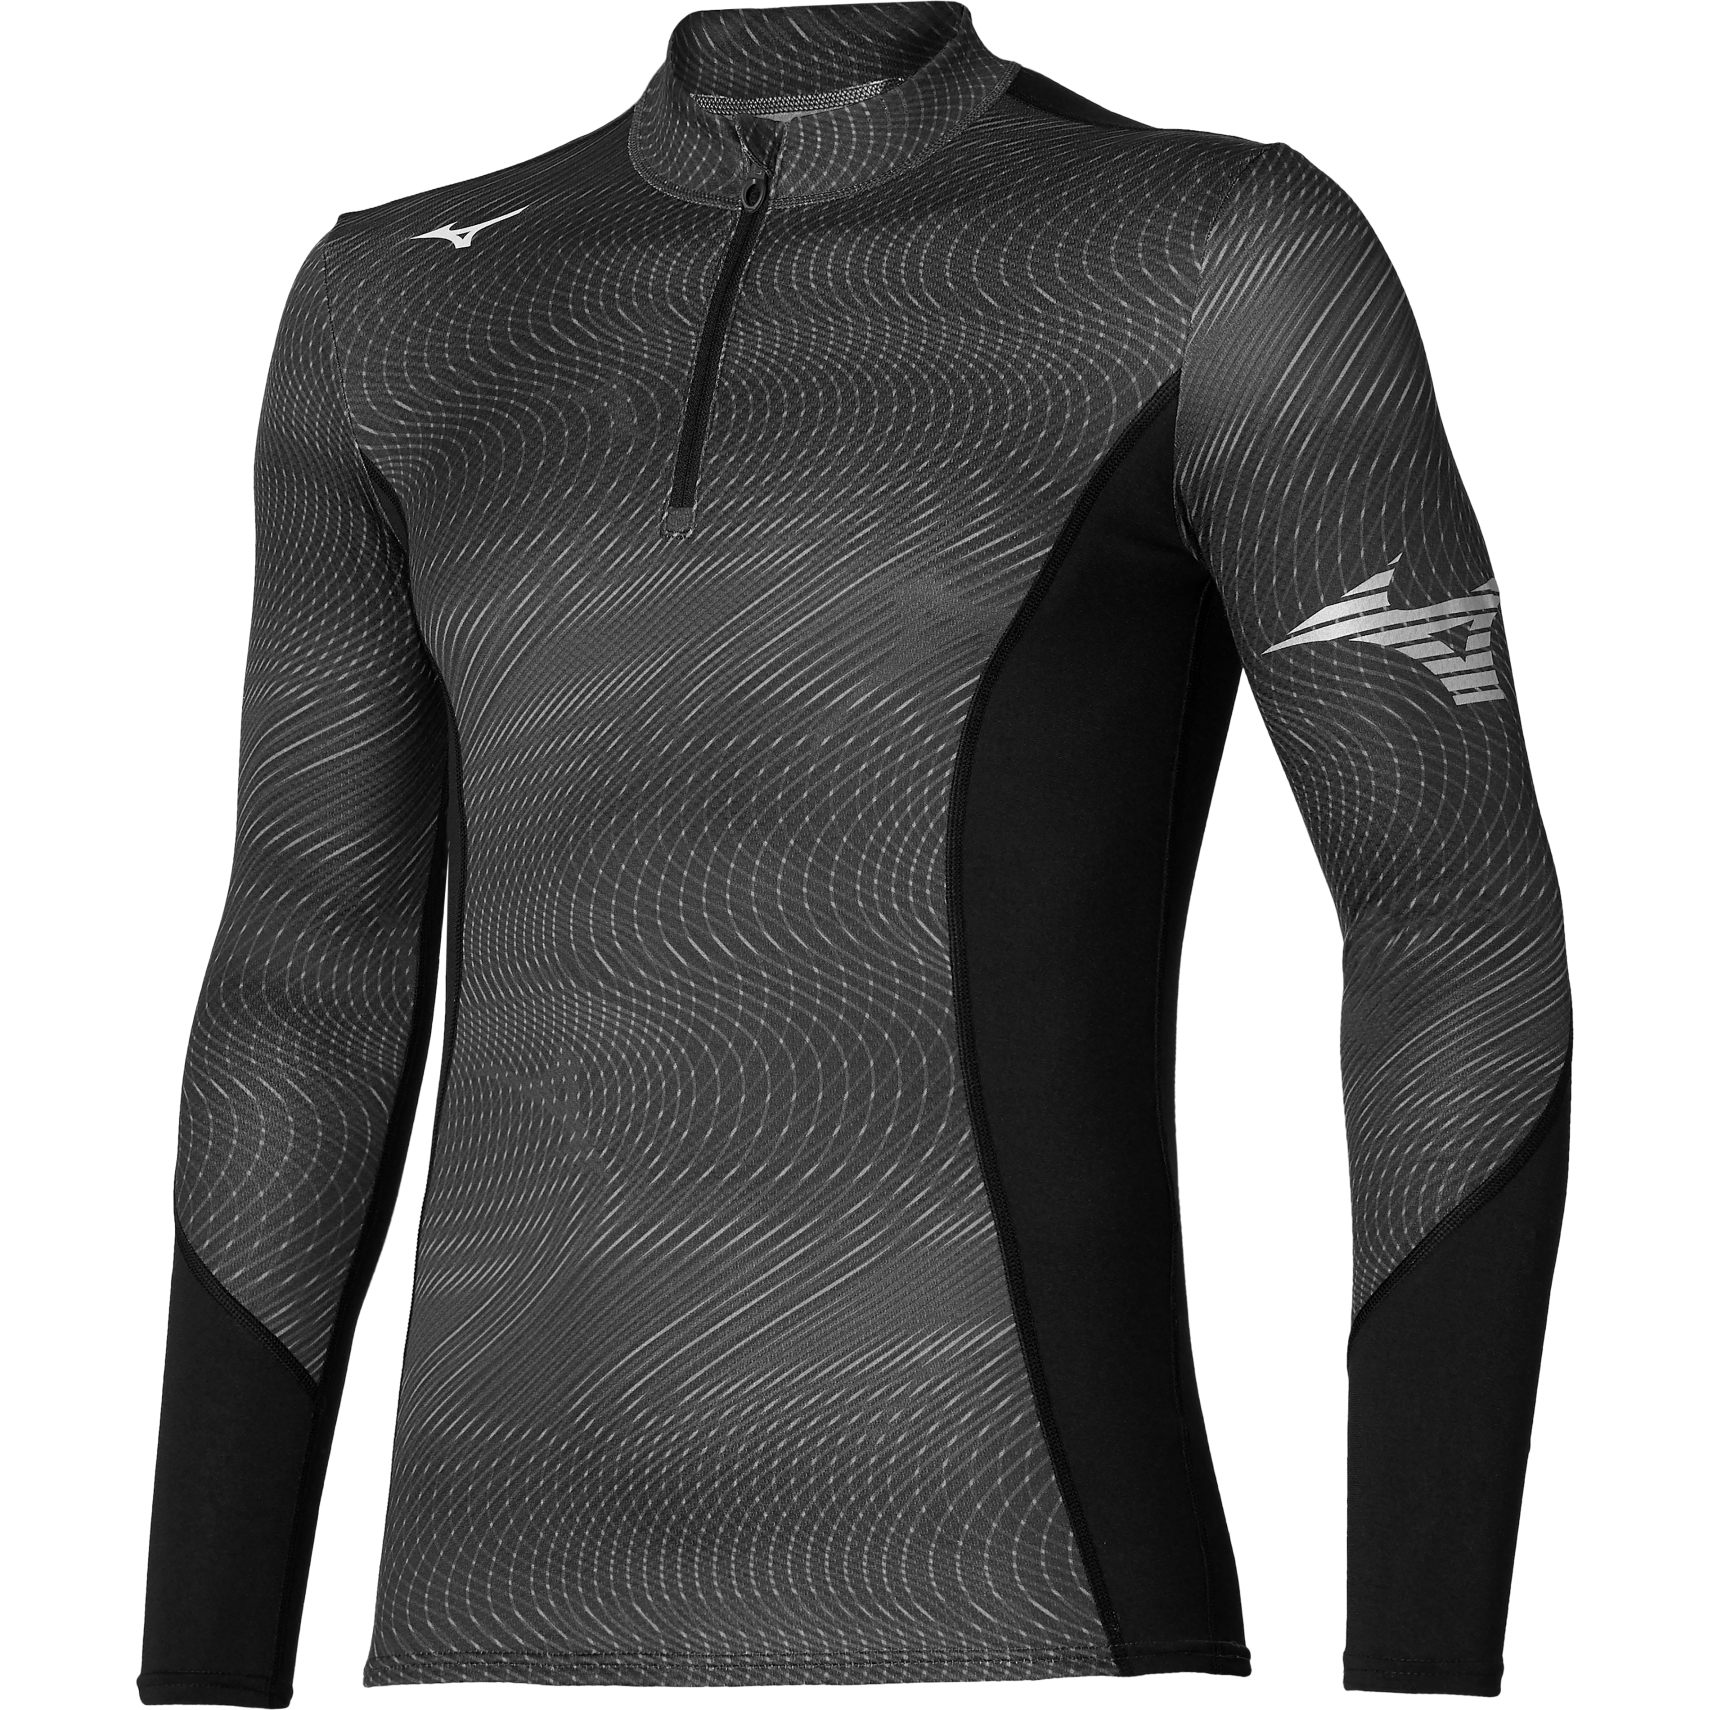 Image of Mizuno Virtual Body G3 Half Zip Long Sleeve Shirt Men - Black